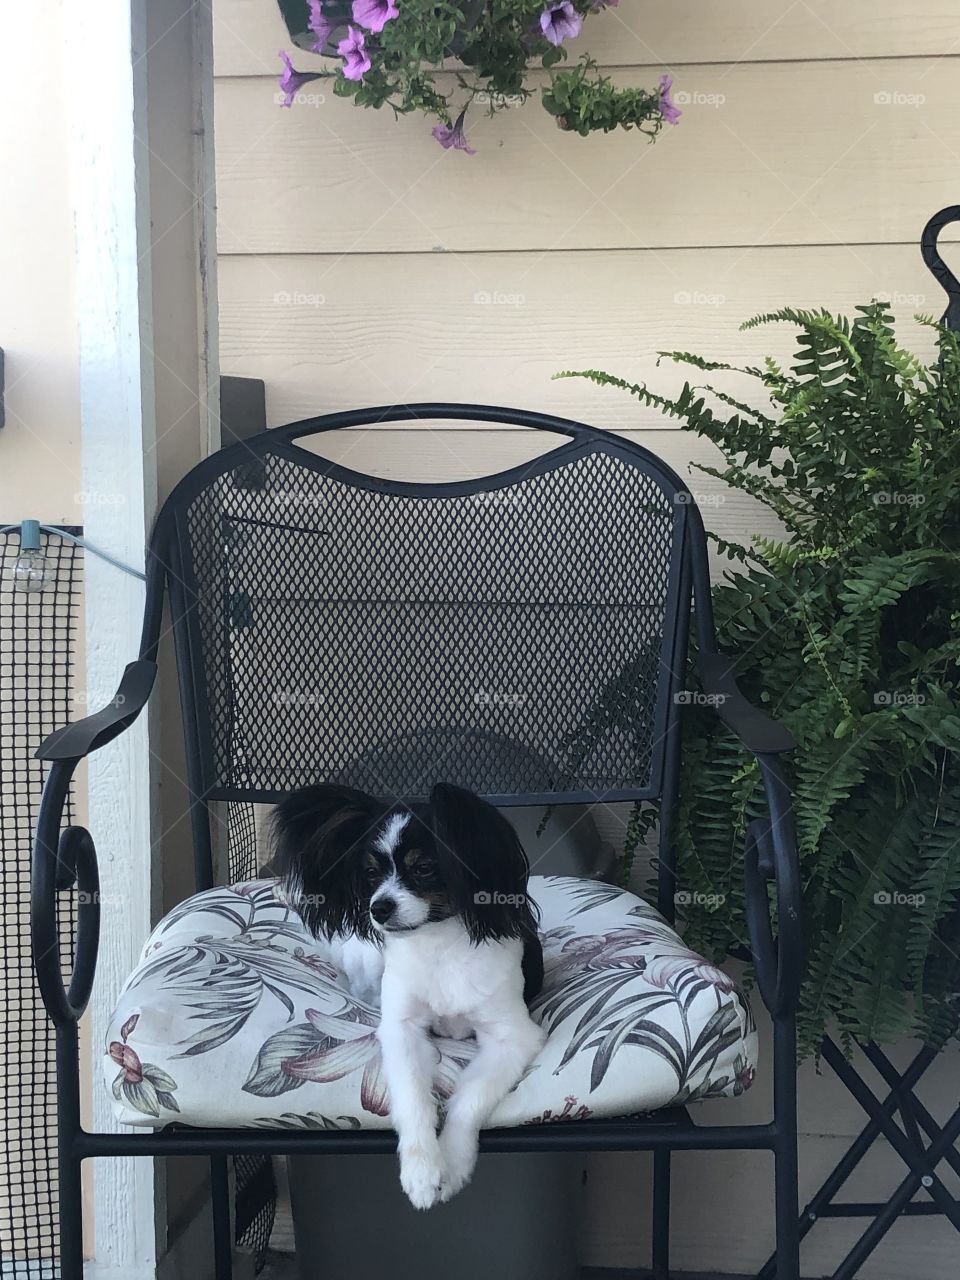 Porch sitting